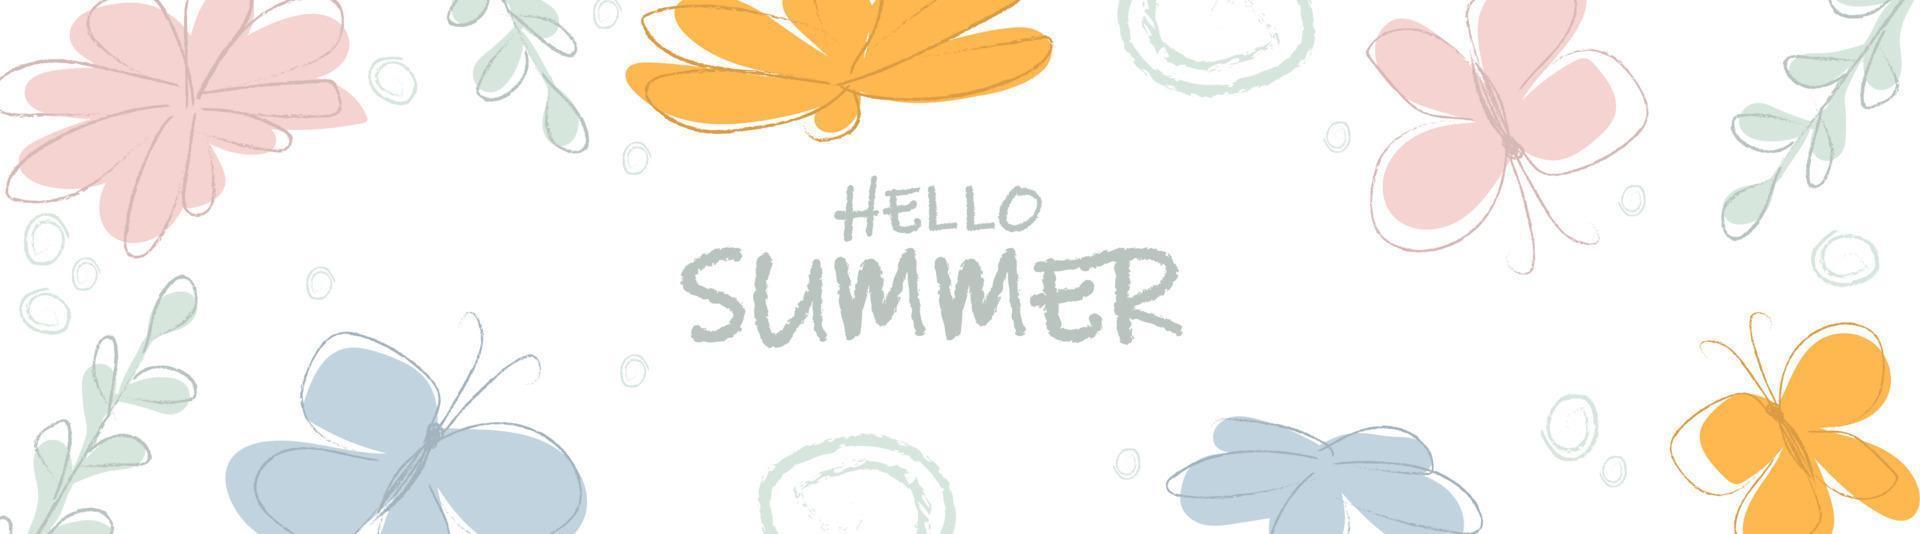 Hello summer banner vector